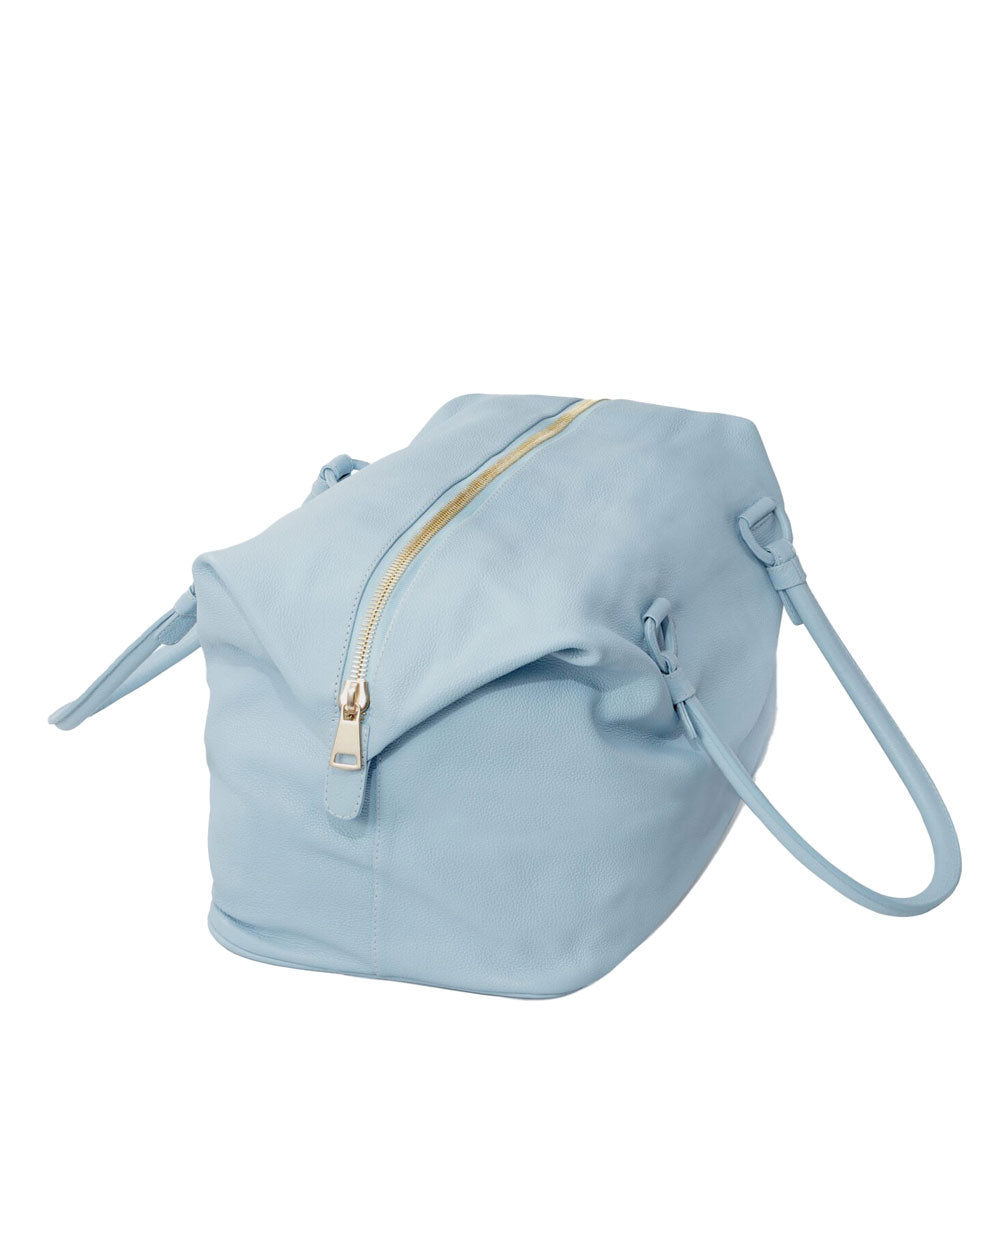 Ava Duffle Bag in Sky Blue